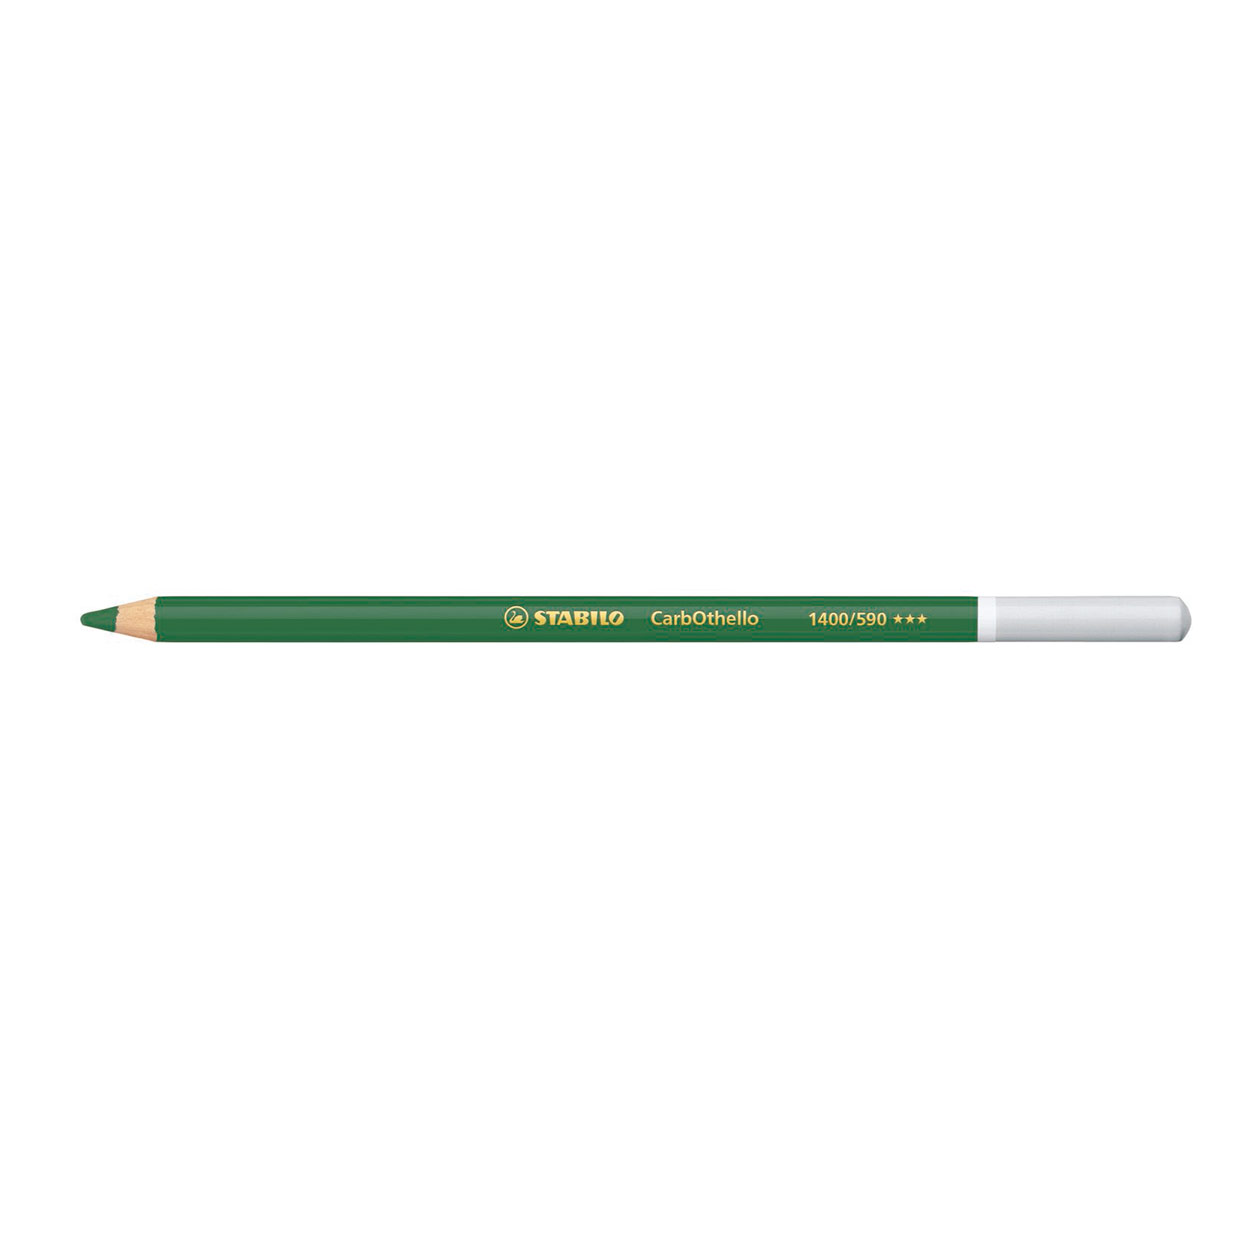 STABILO CarbOthello -Crayon de couleur pastel citron vert - Vert Viridian